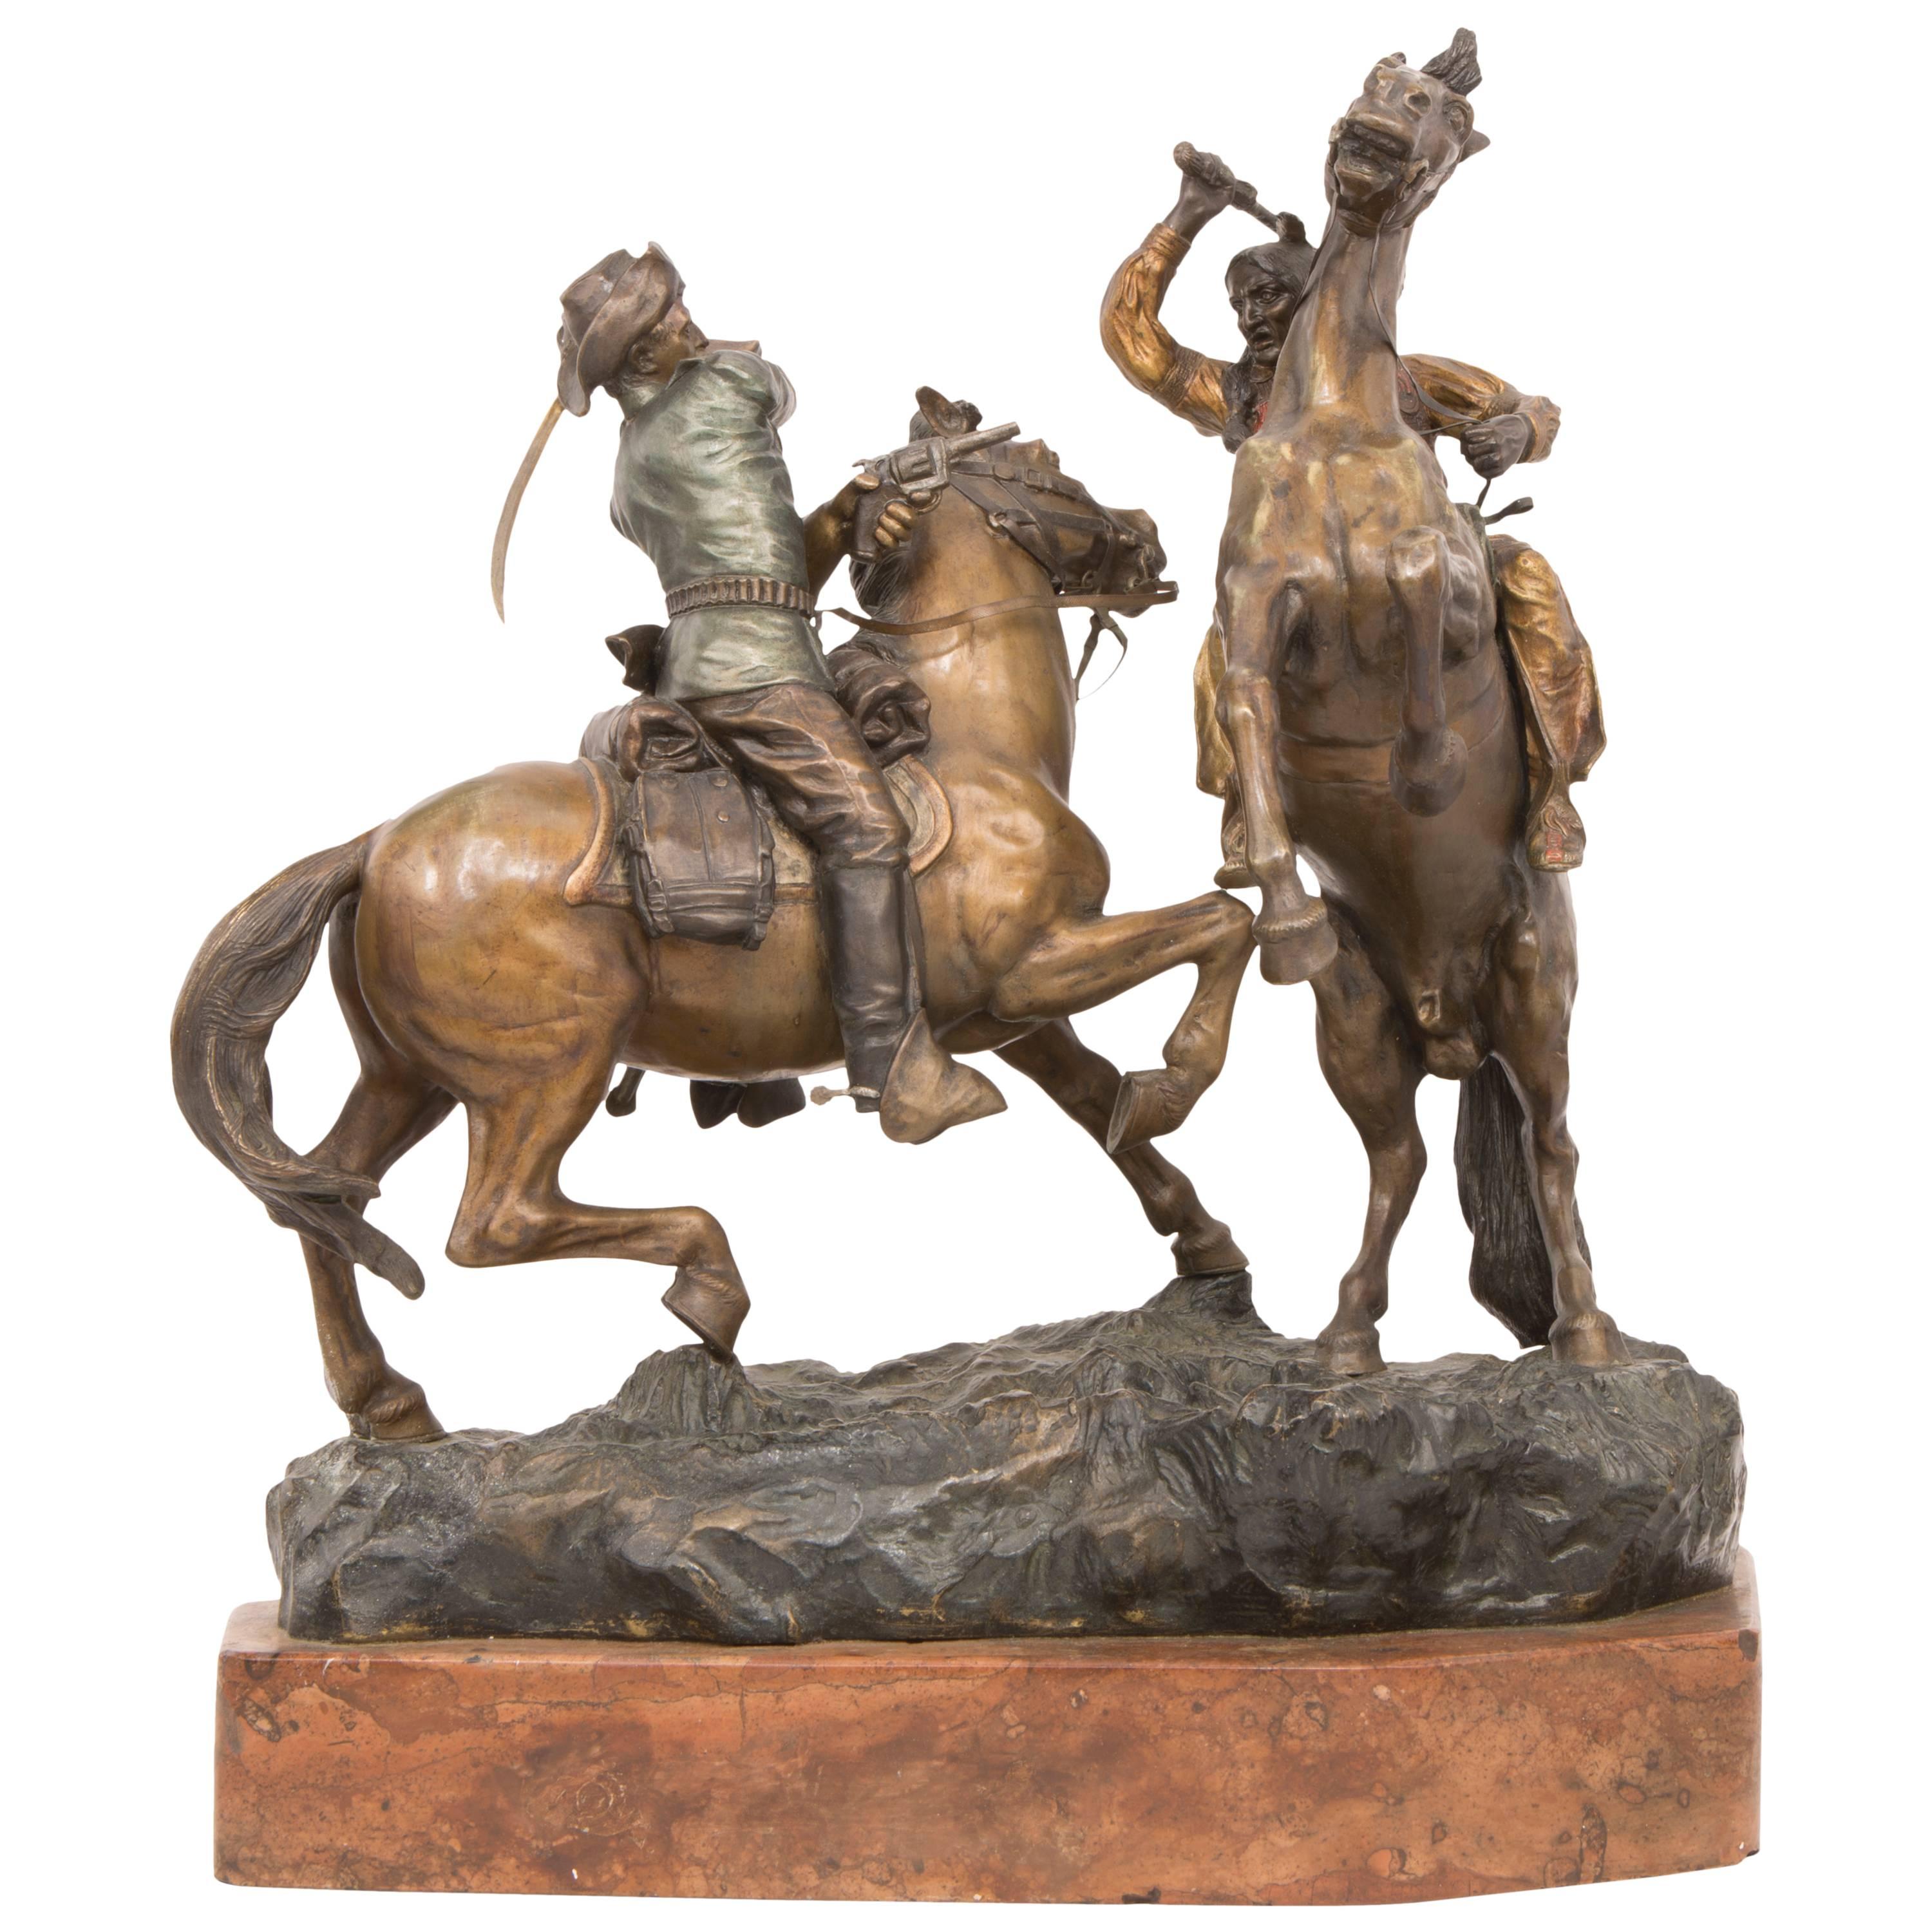 Cowboy and Indian Sculpture by, Carl Kauba